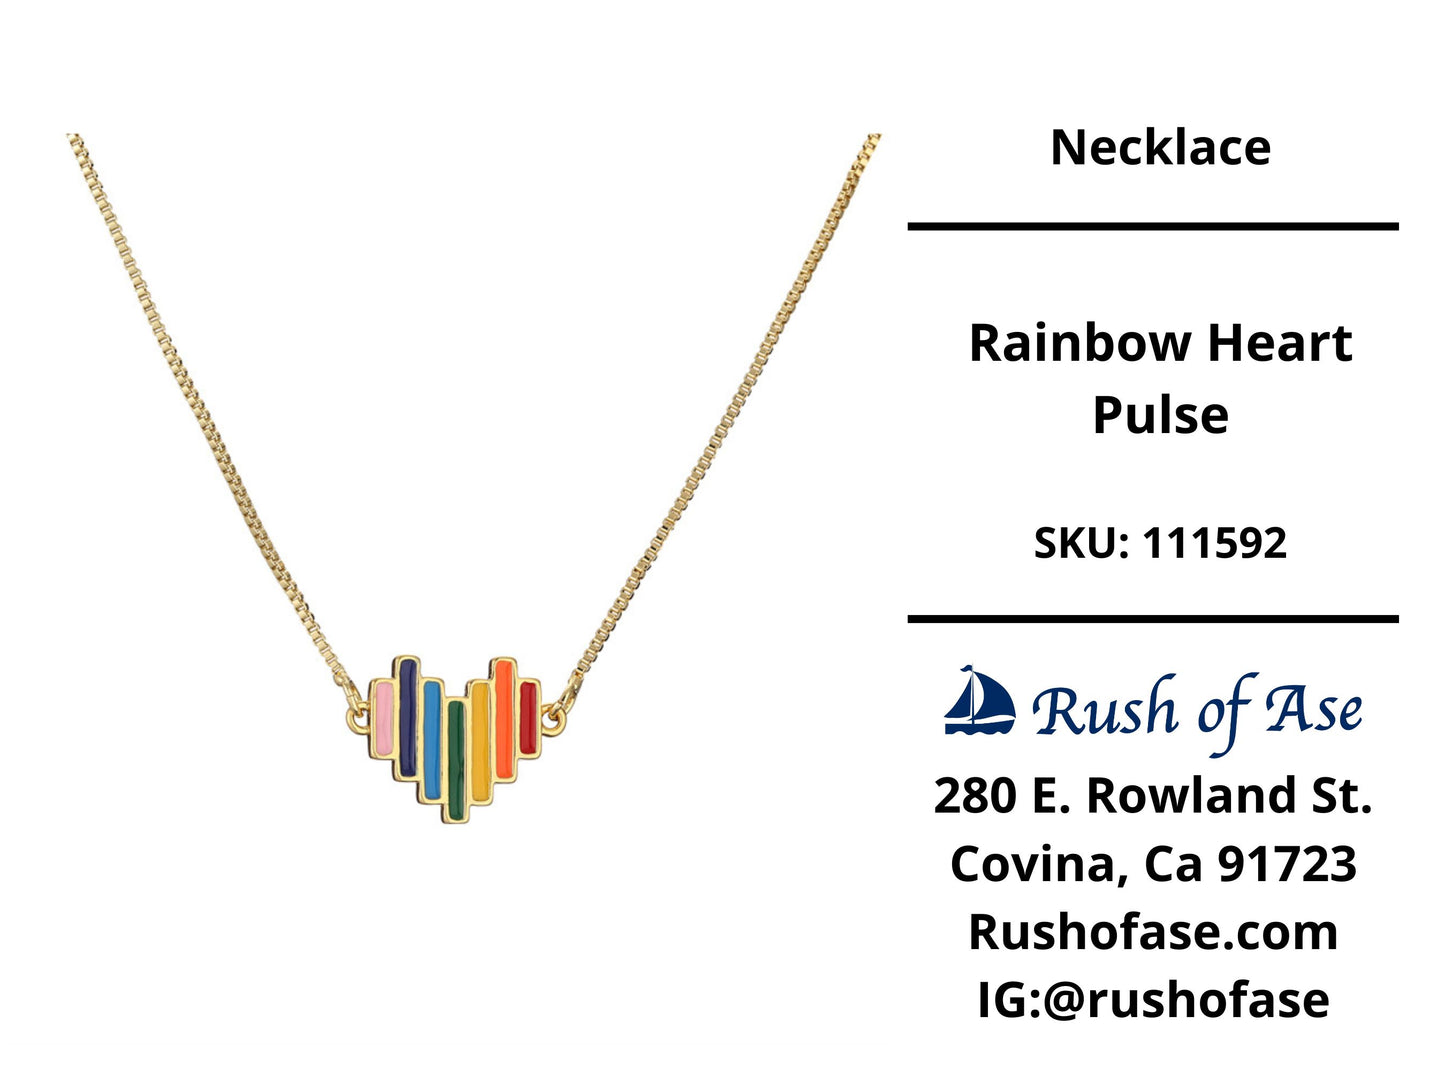 Necklace | Rainbow Necklaces